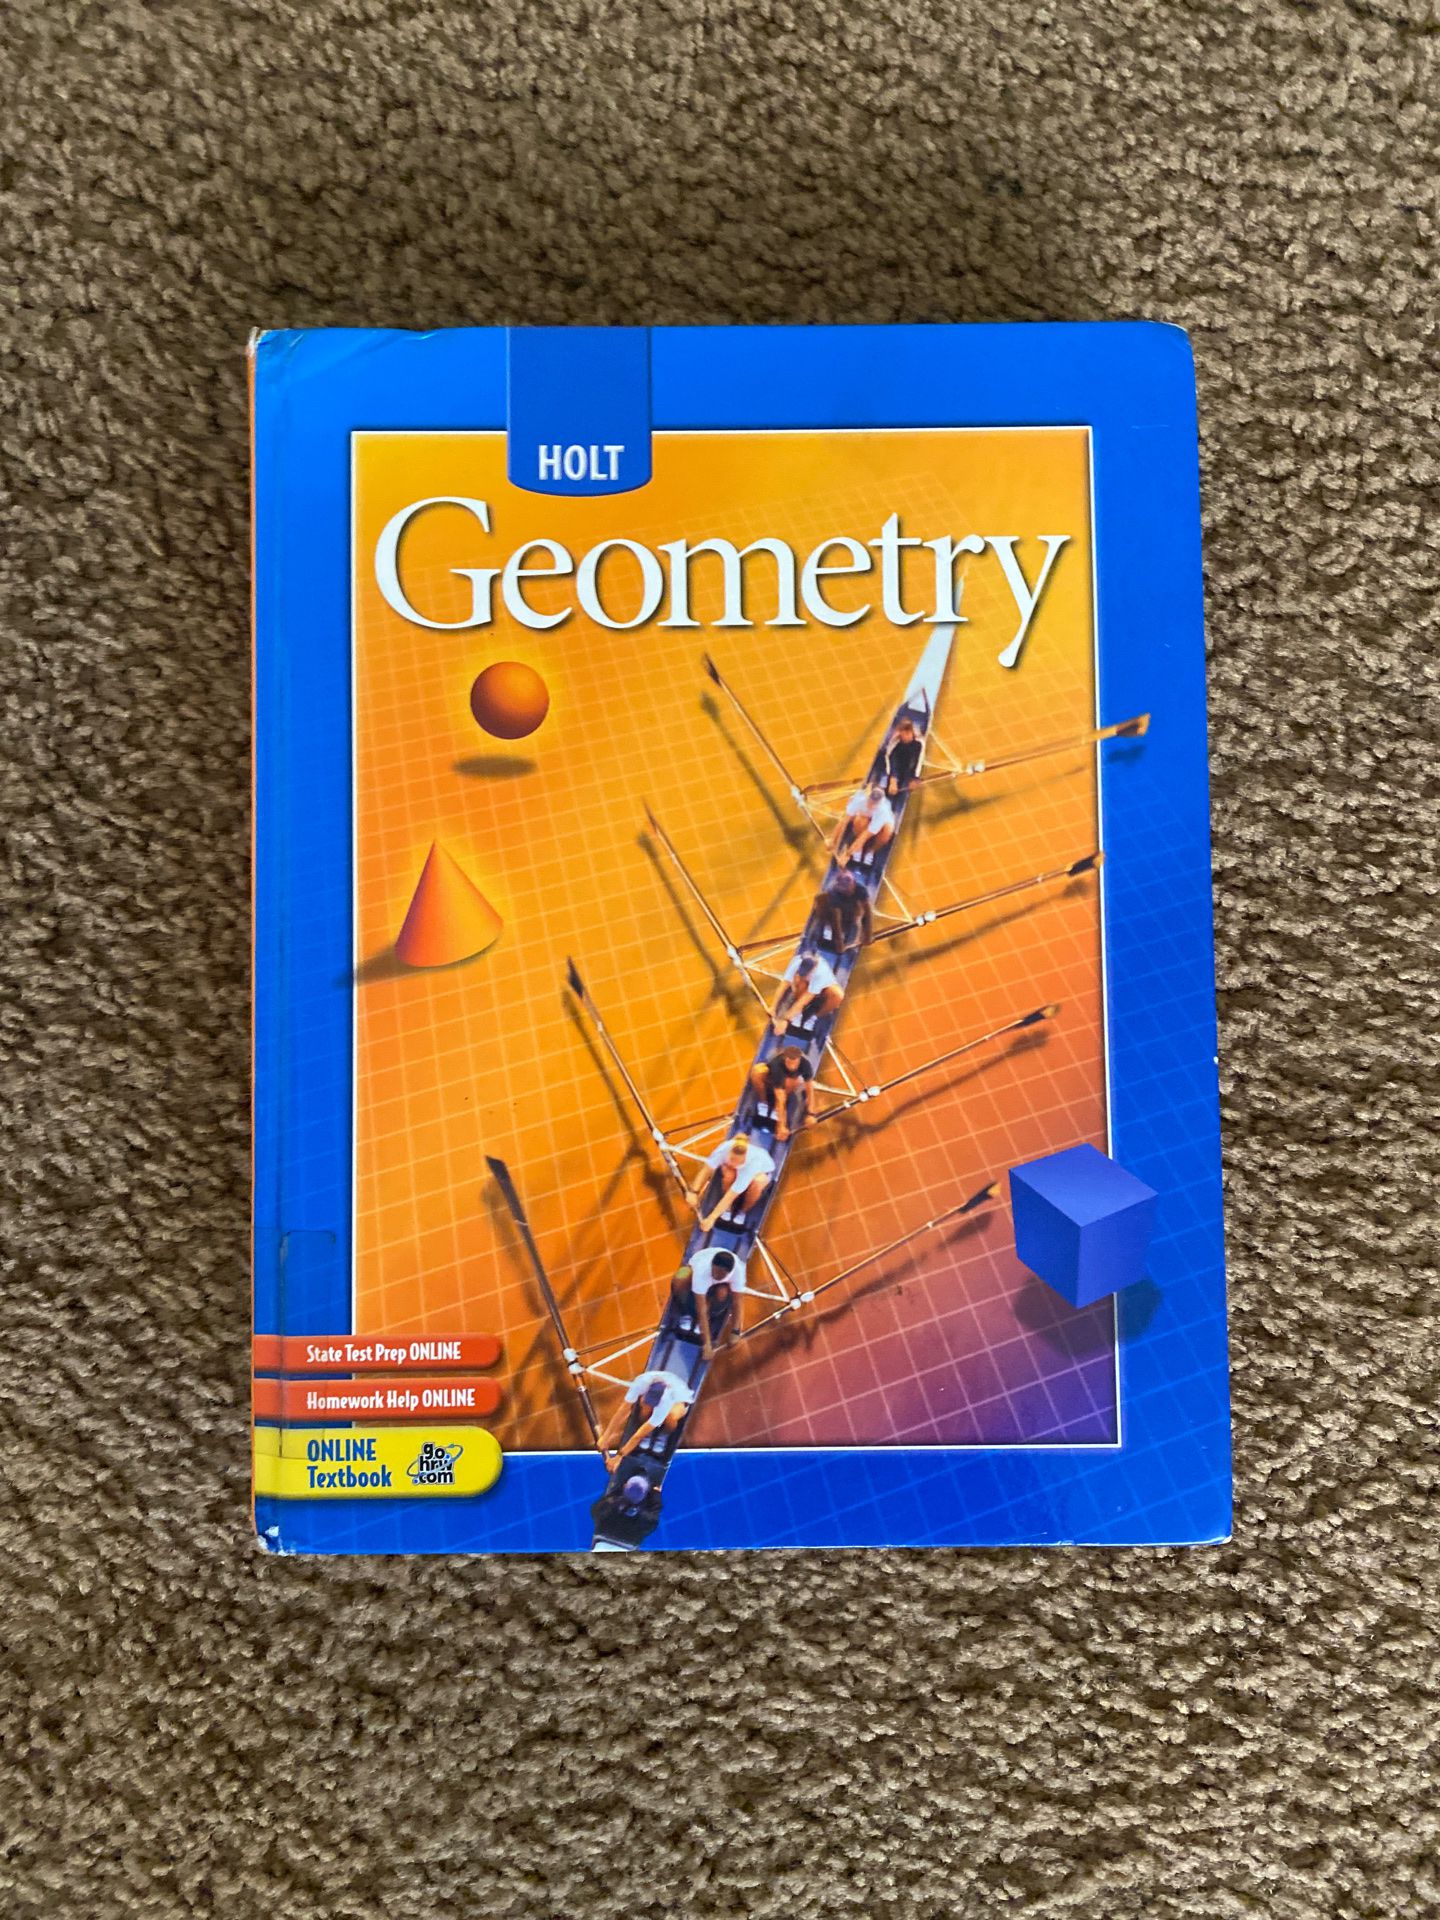 Holt Geometry textbook